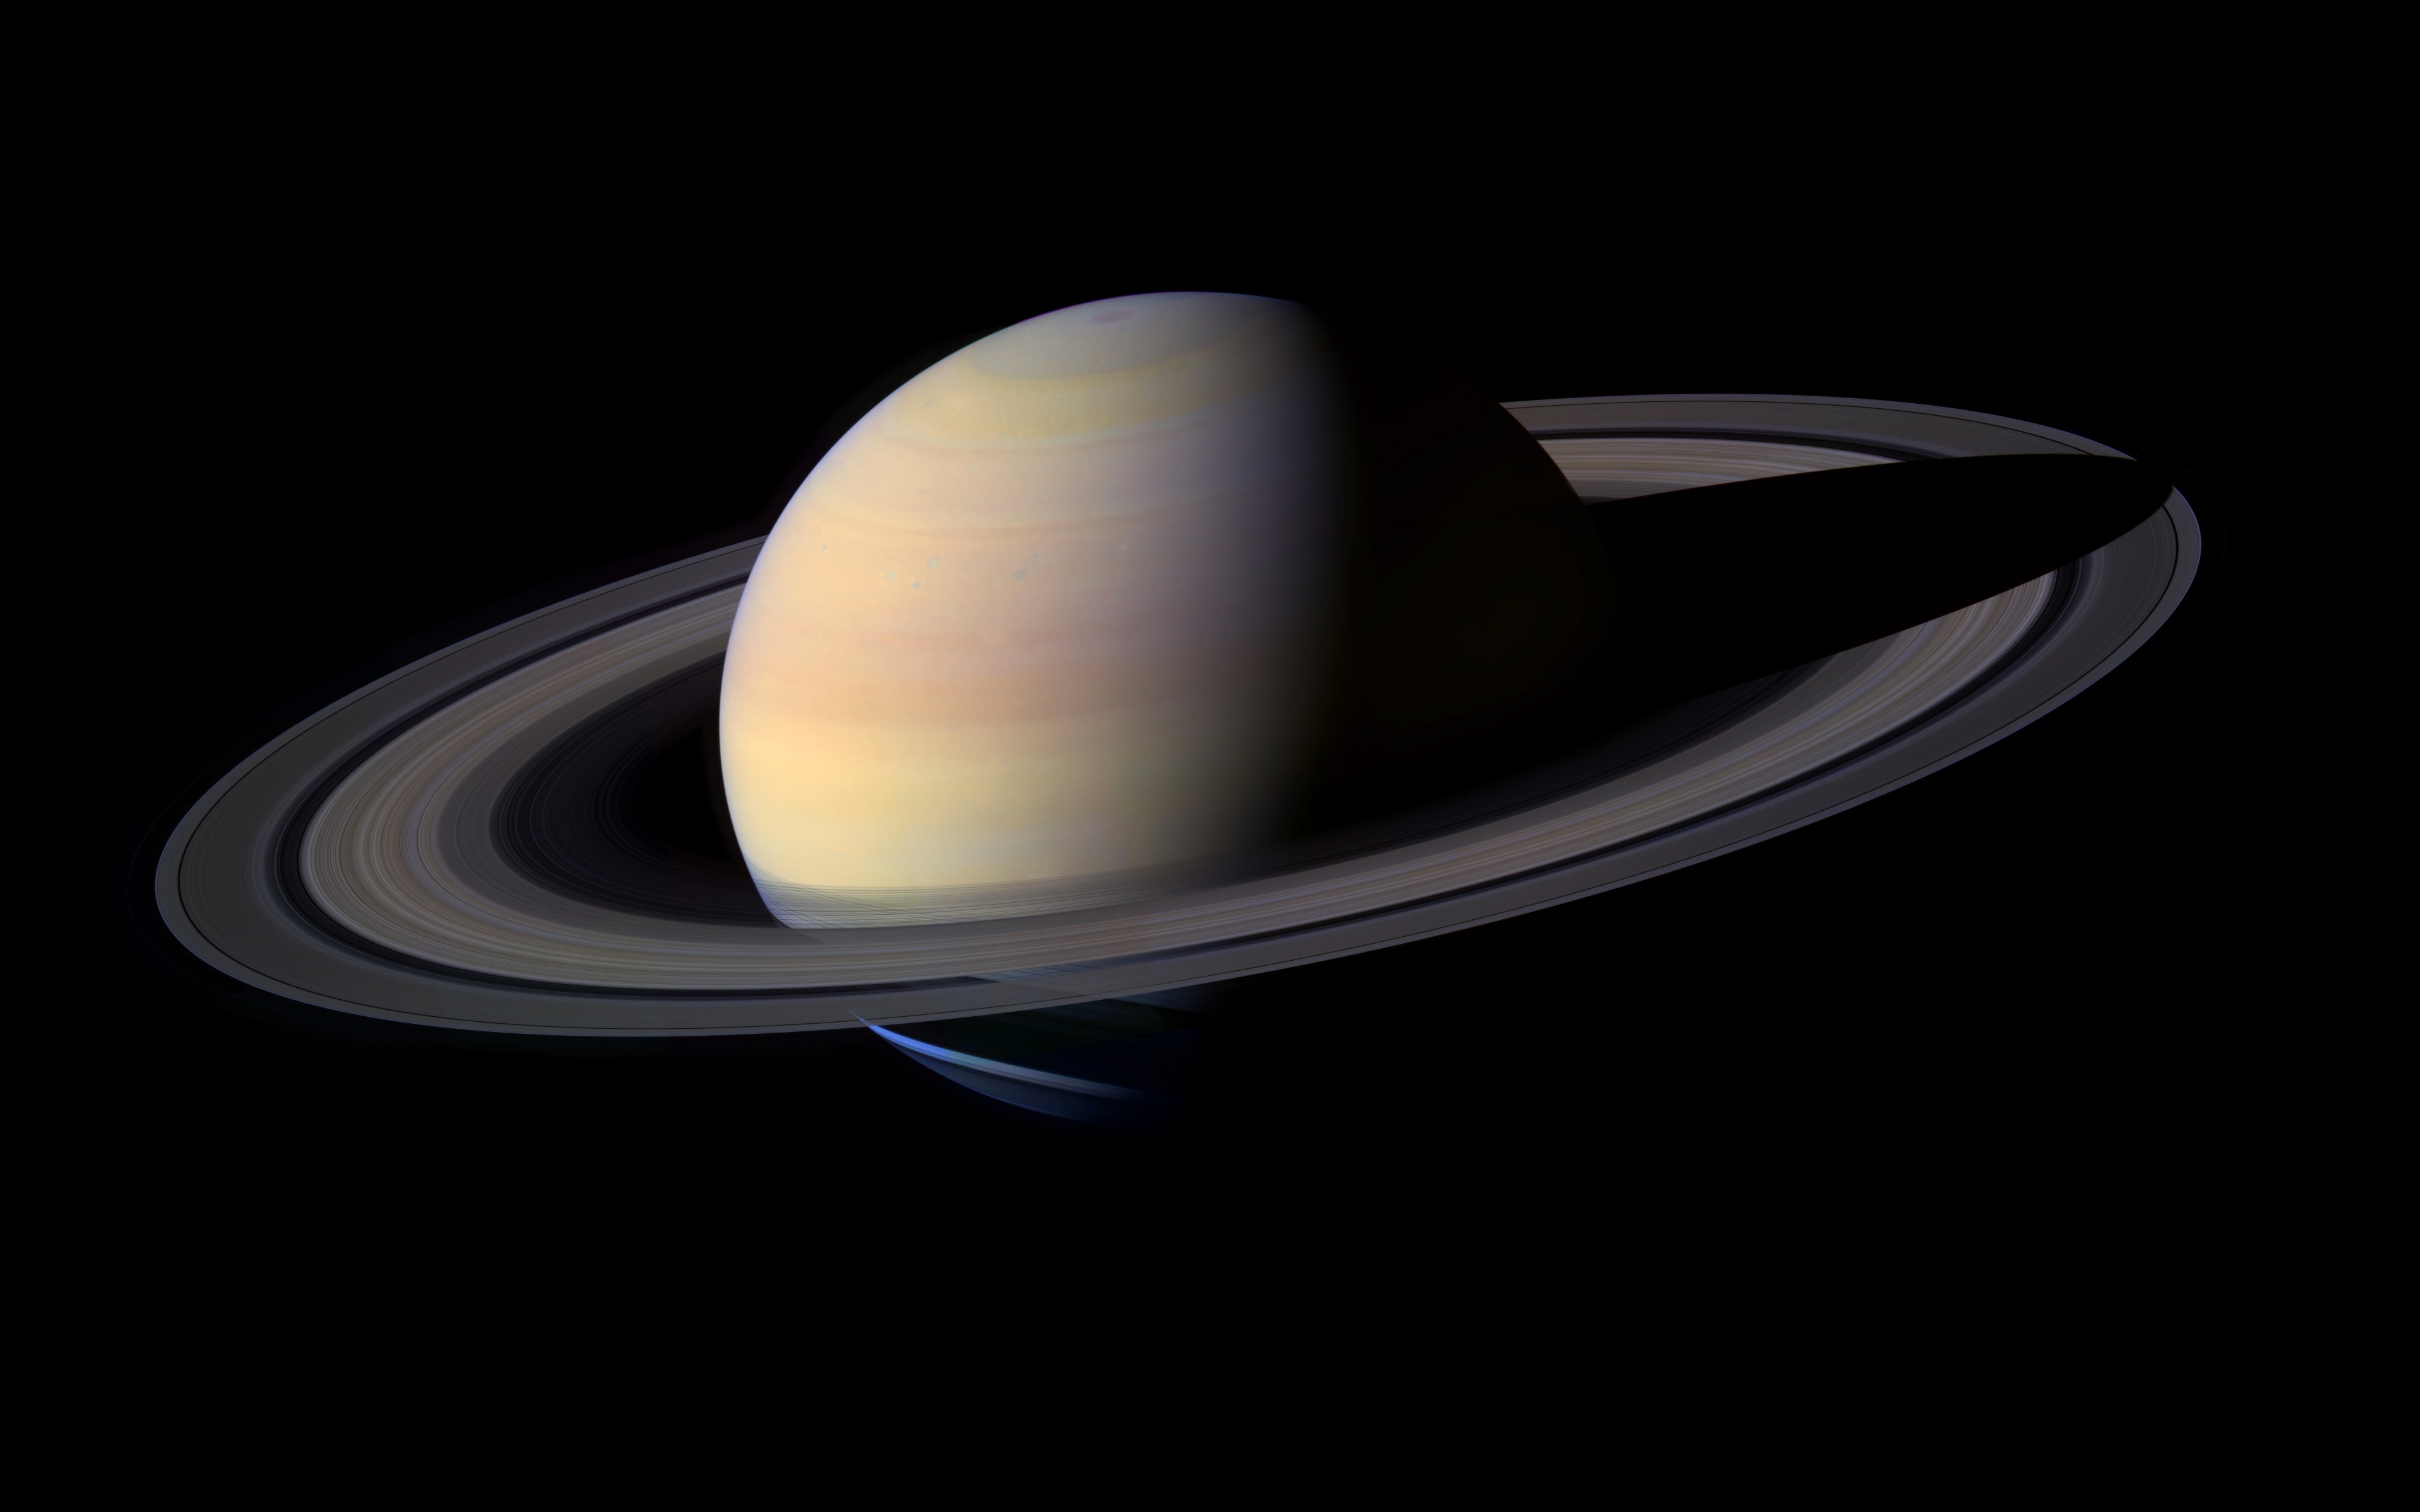 Saturn 4k Ultra HD Wallpaper Background Image Id